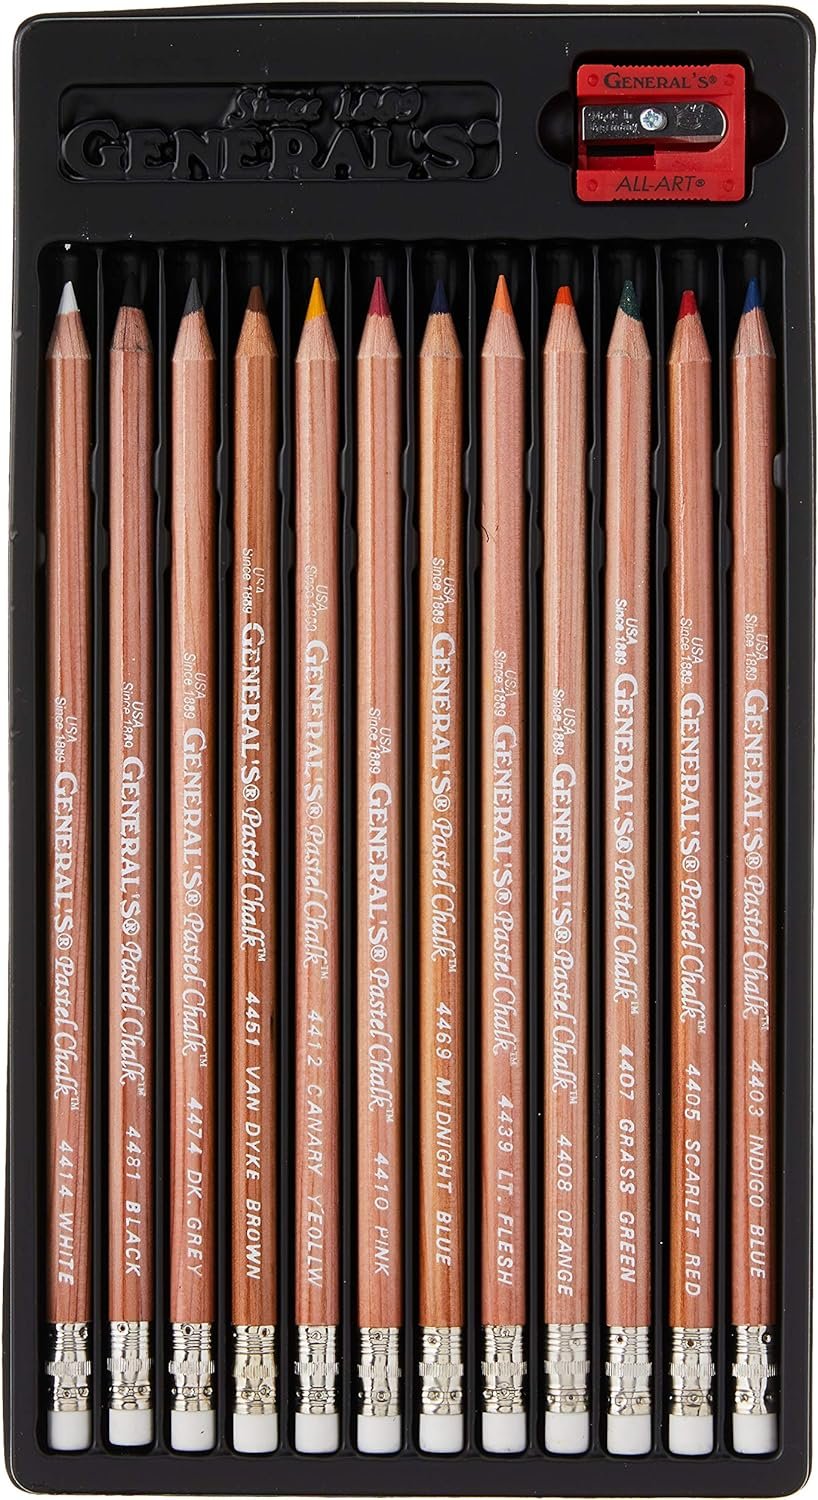 General Pencil 4400-12A General's Pastel Chalk Pencils, 12 Colors, Multicolor, 7 x 1/4 x 1/4 in